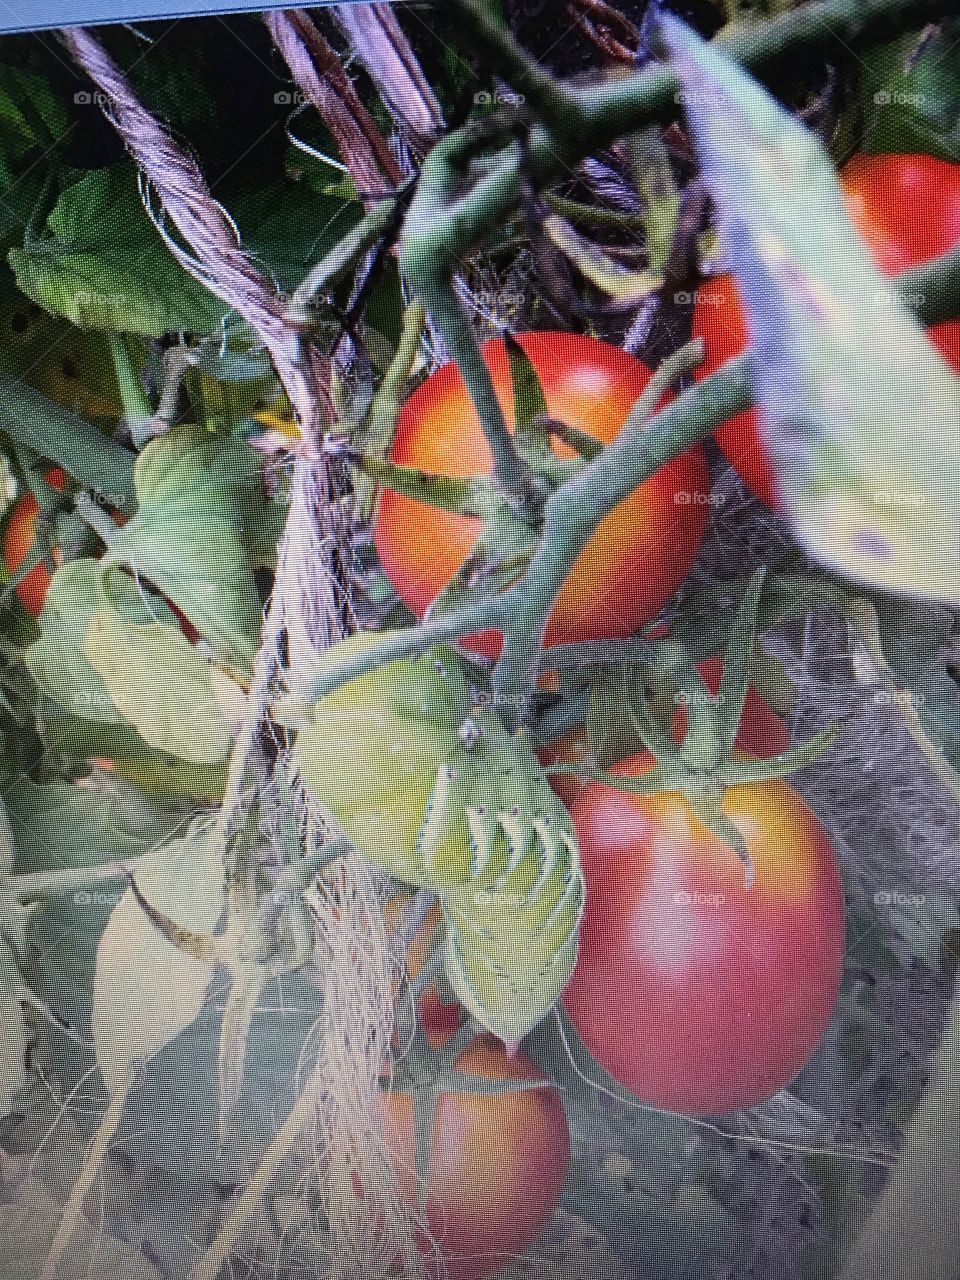 Caterpillar tomato plant